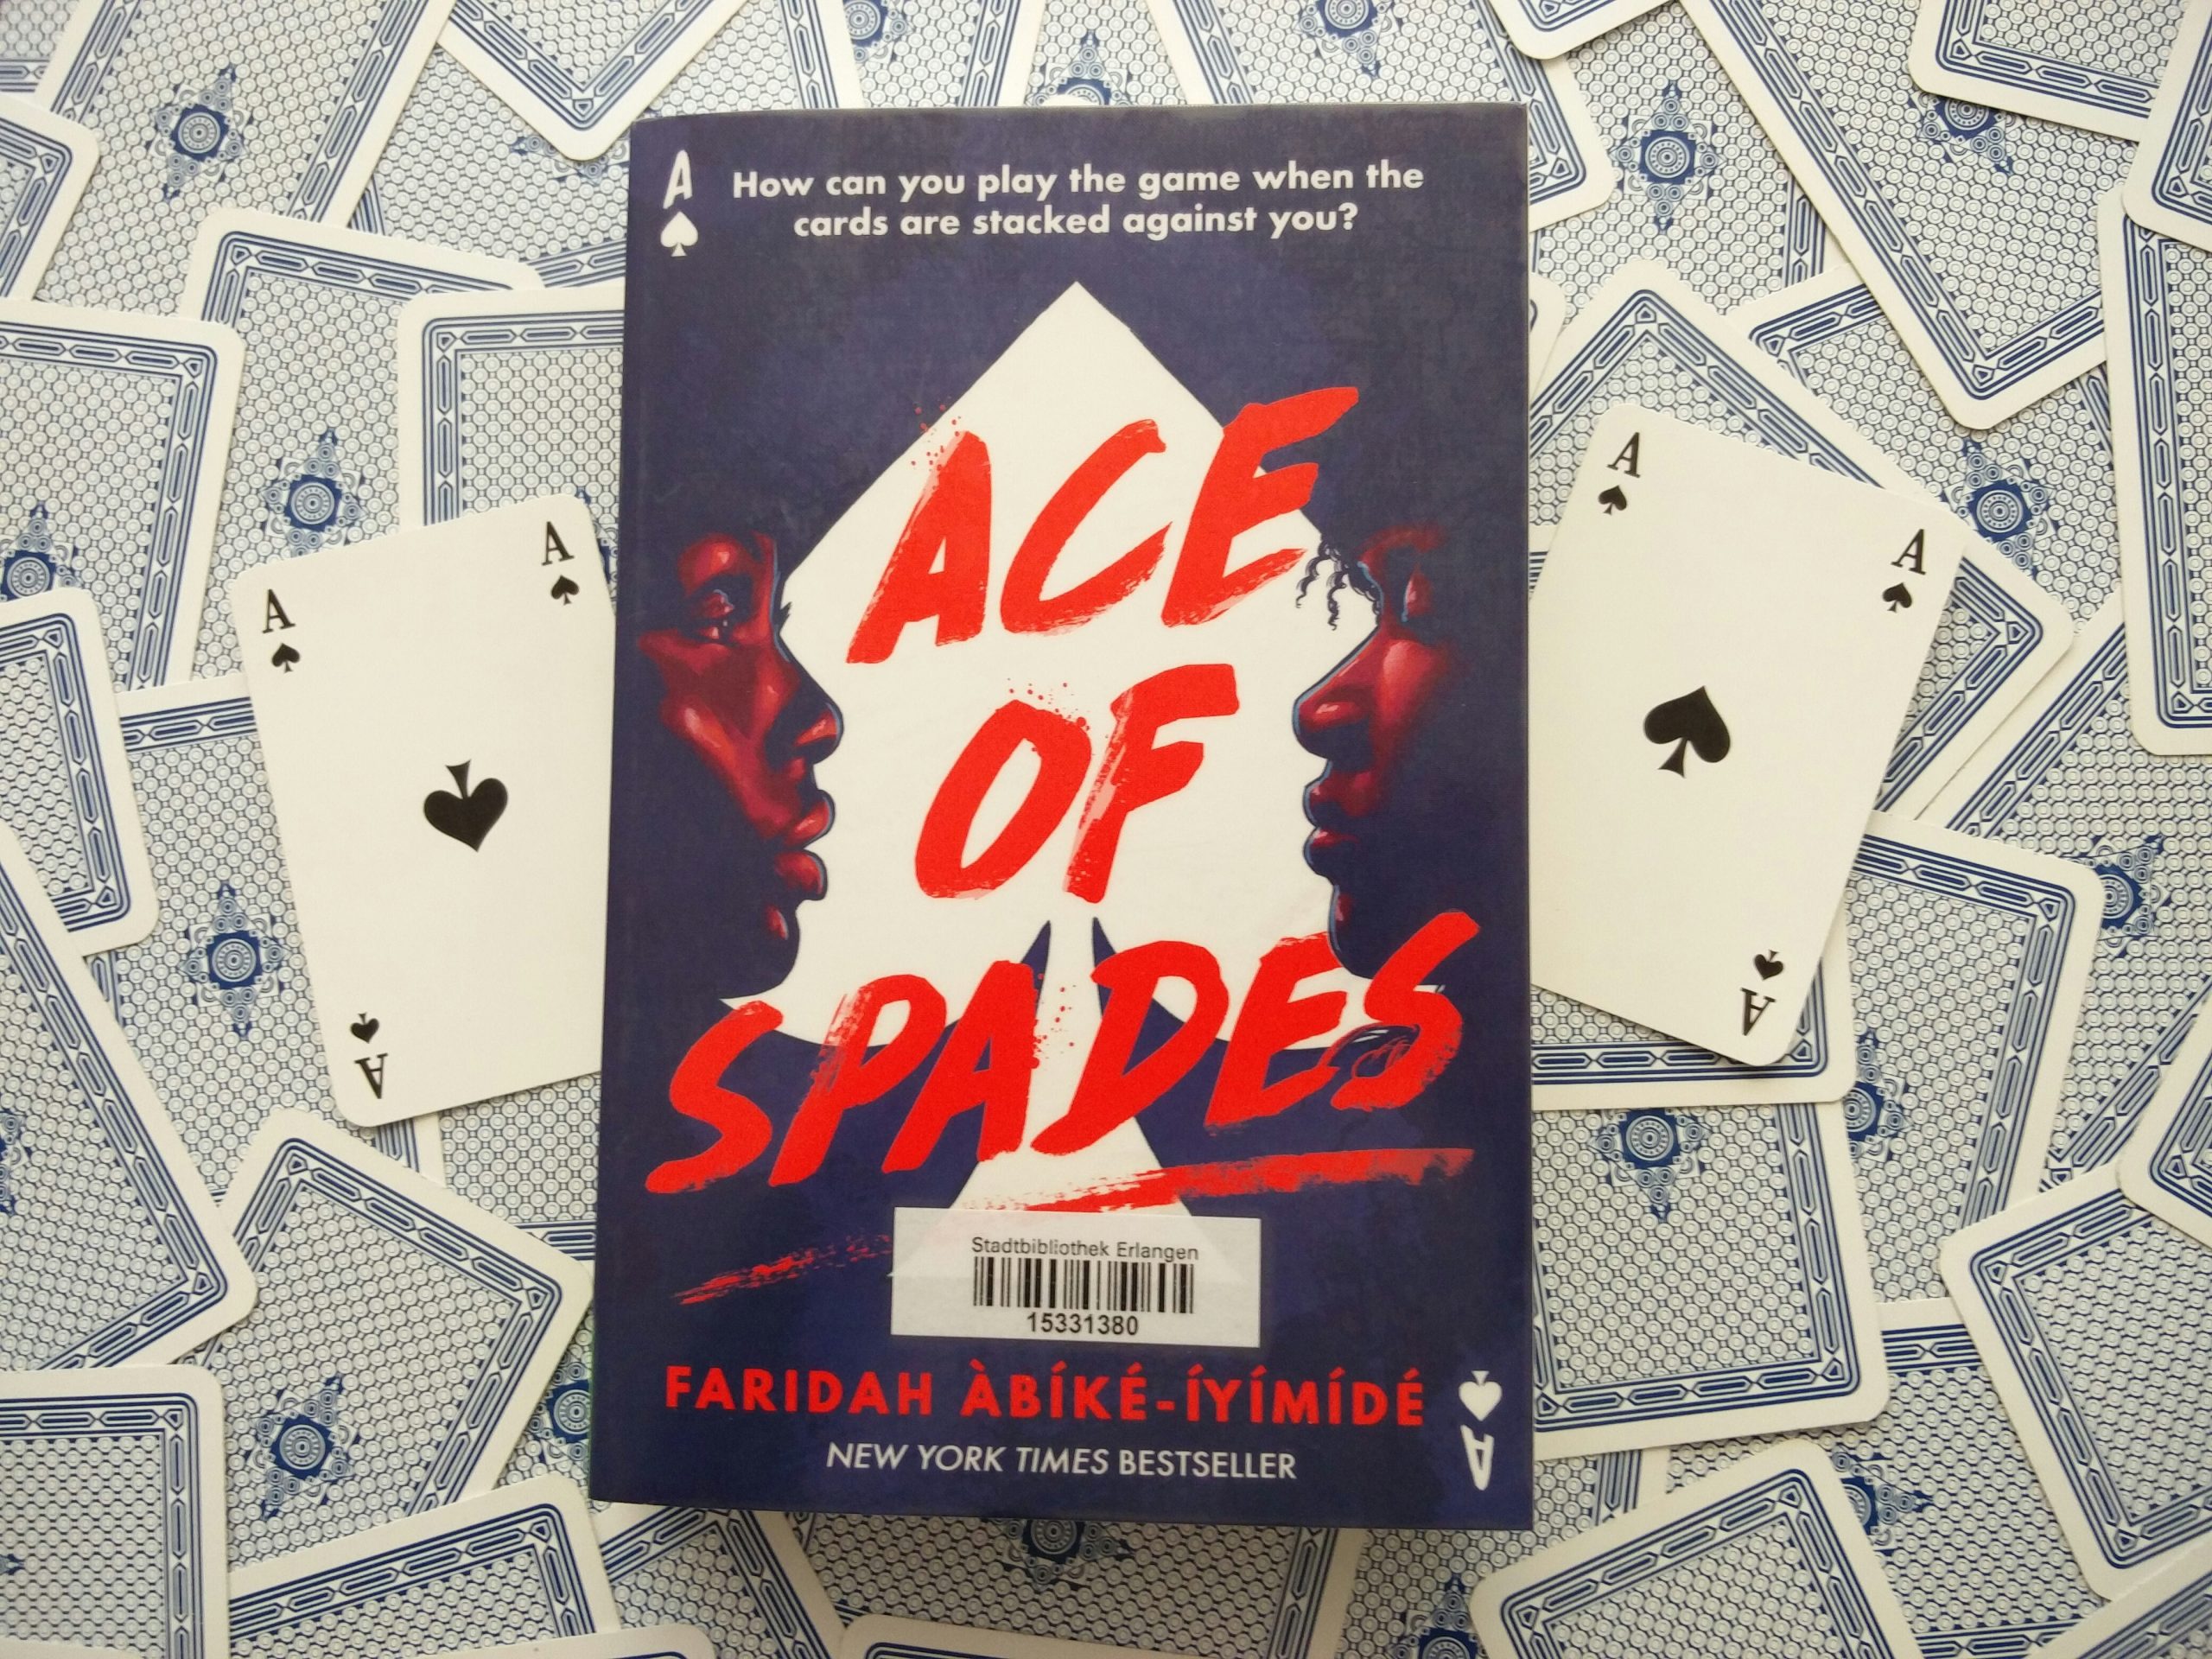 Mein Lesetipp: Ace of Spades